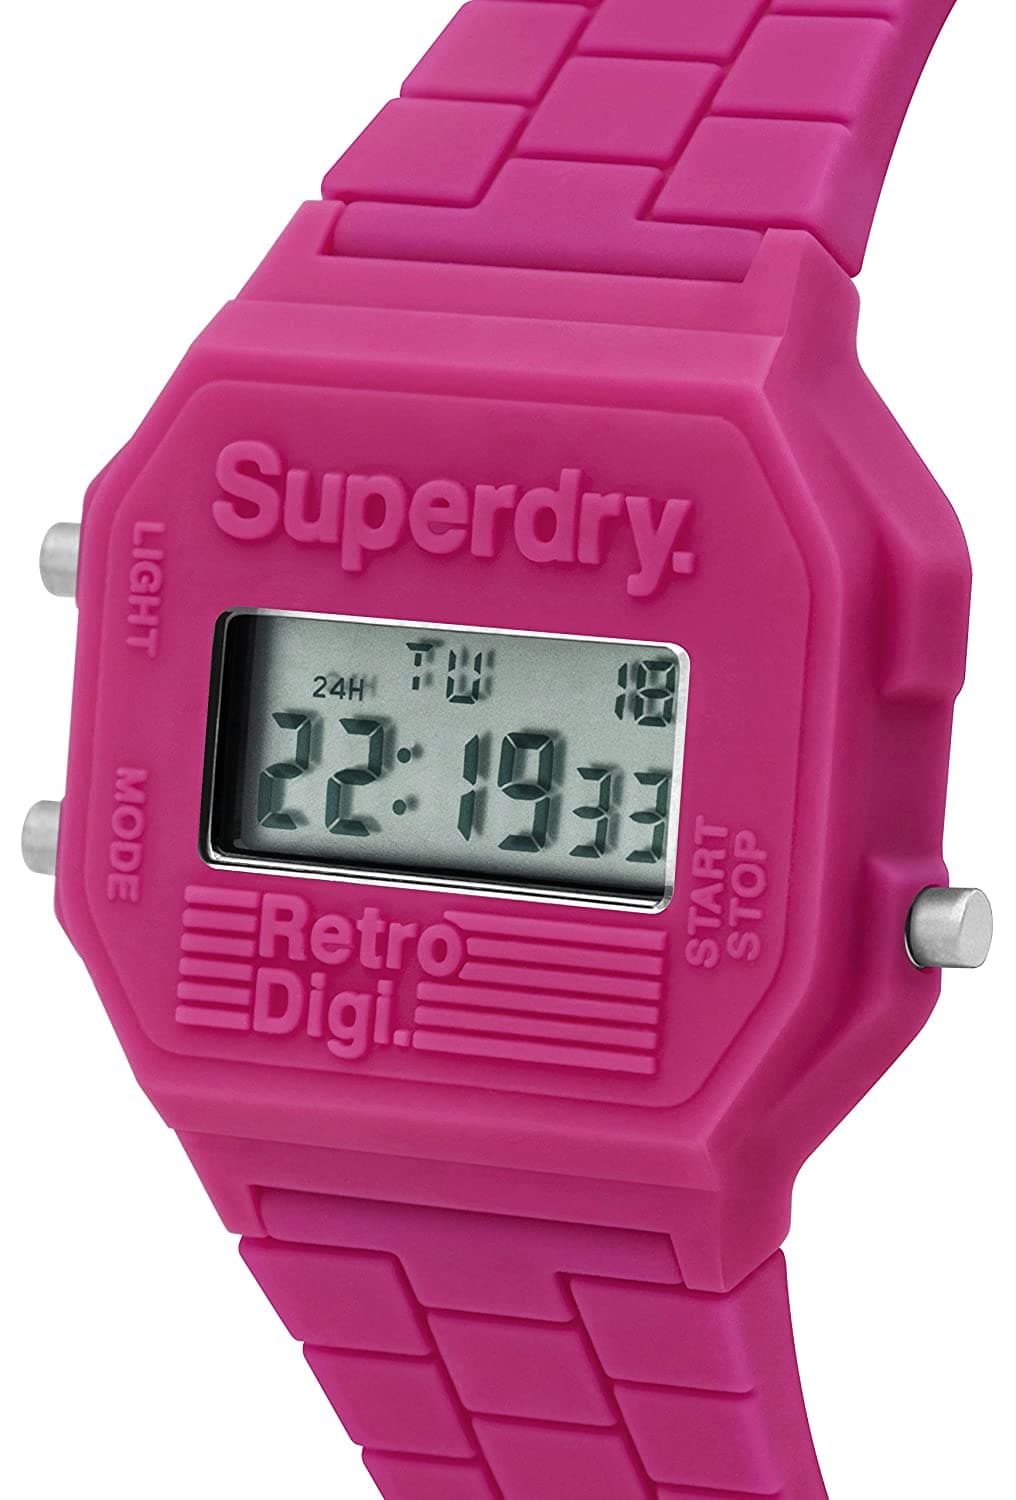 SUPERDRY MINI RETRO DIGI SYL201P WOMEN'S WATCH - H2 Hub Watches